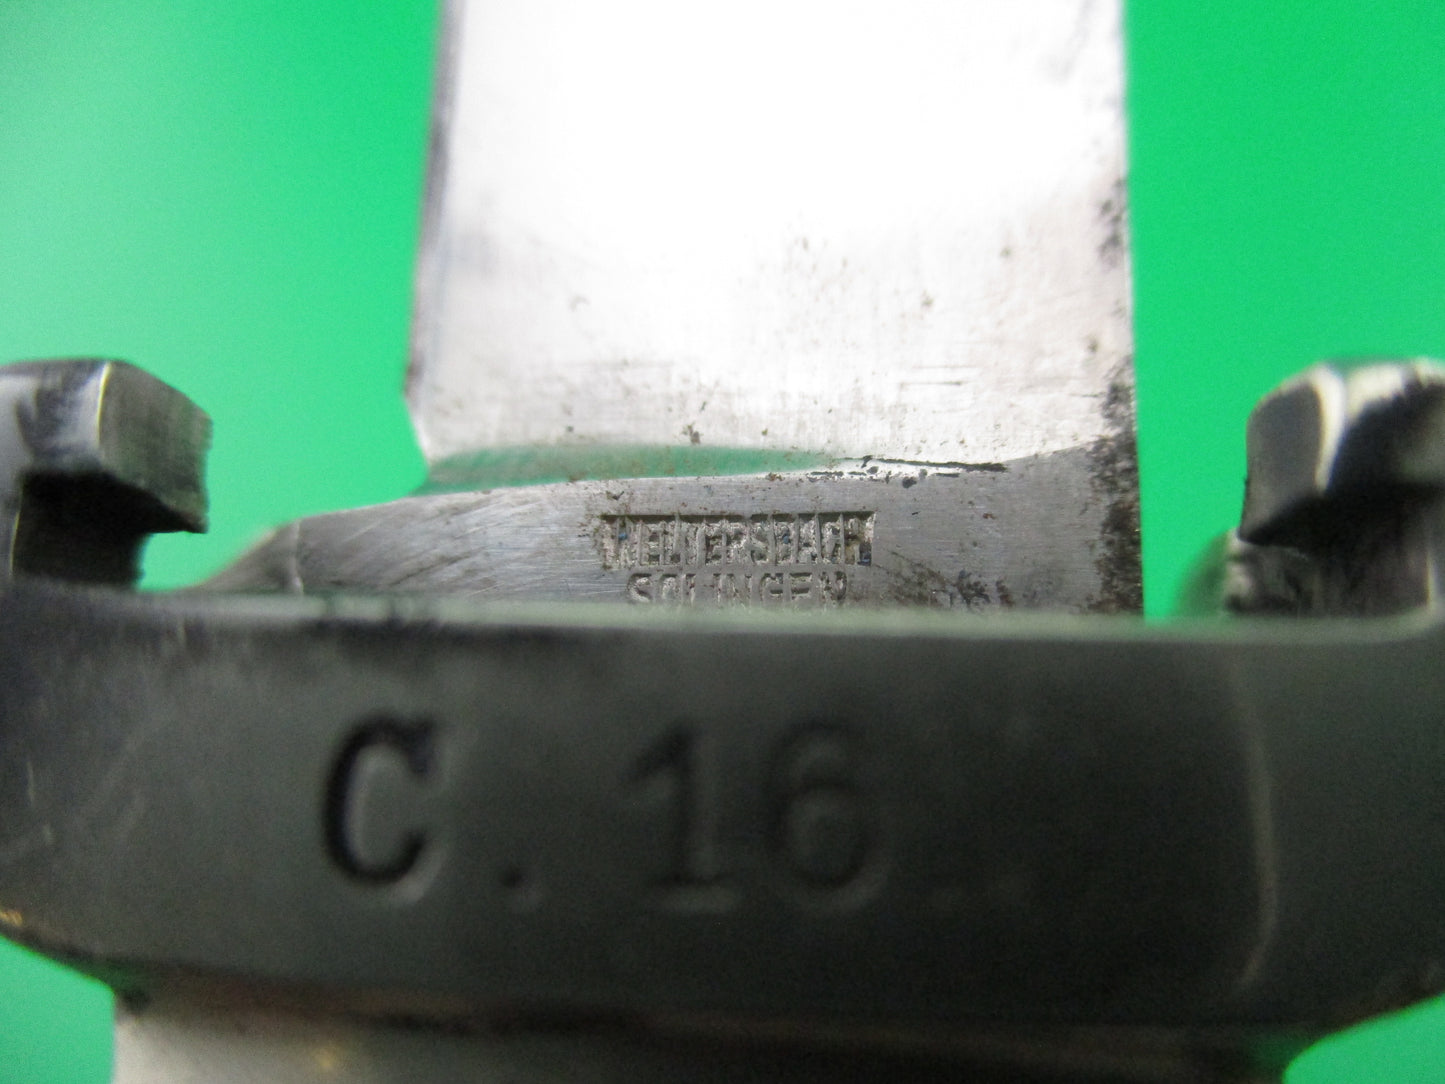 Weltersbach SOLINGEN Germany NOS Stag Shell Puller Corkscrew multi blade Manual knife